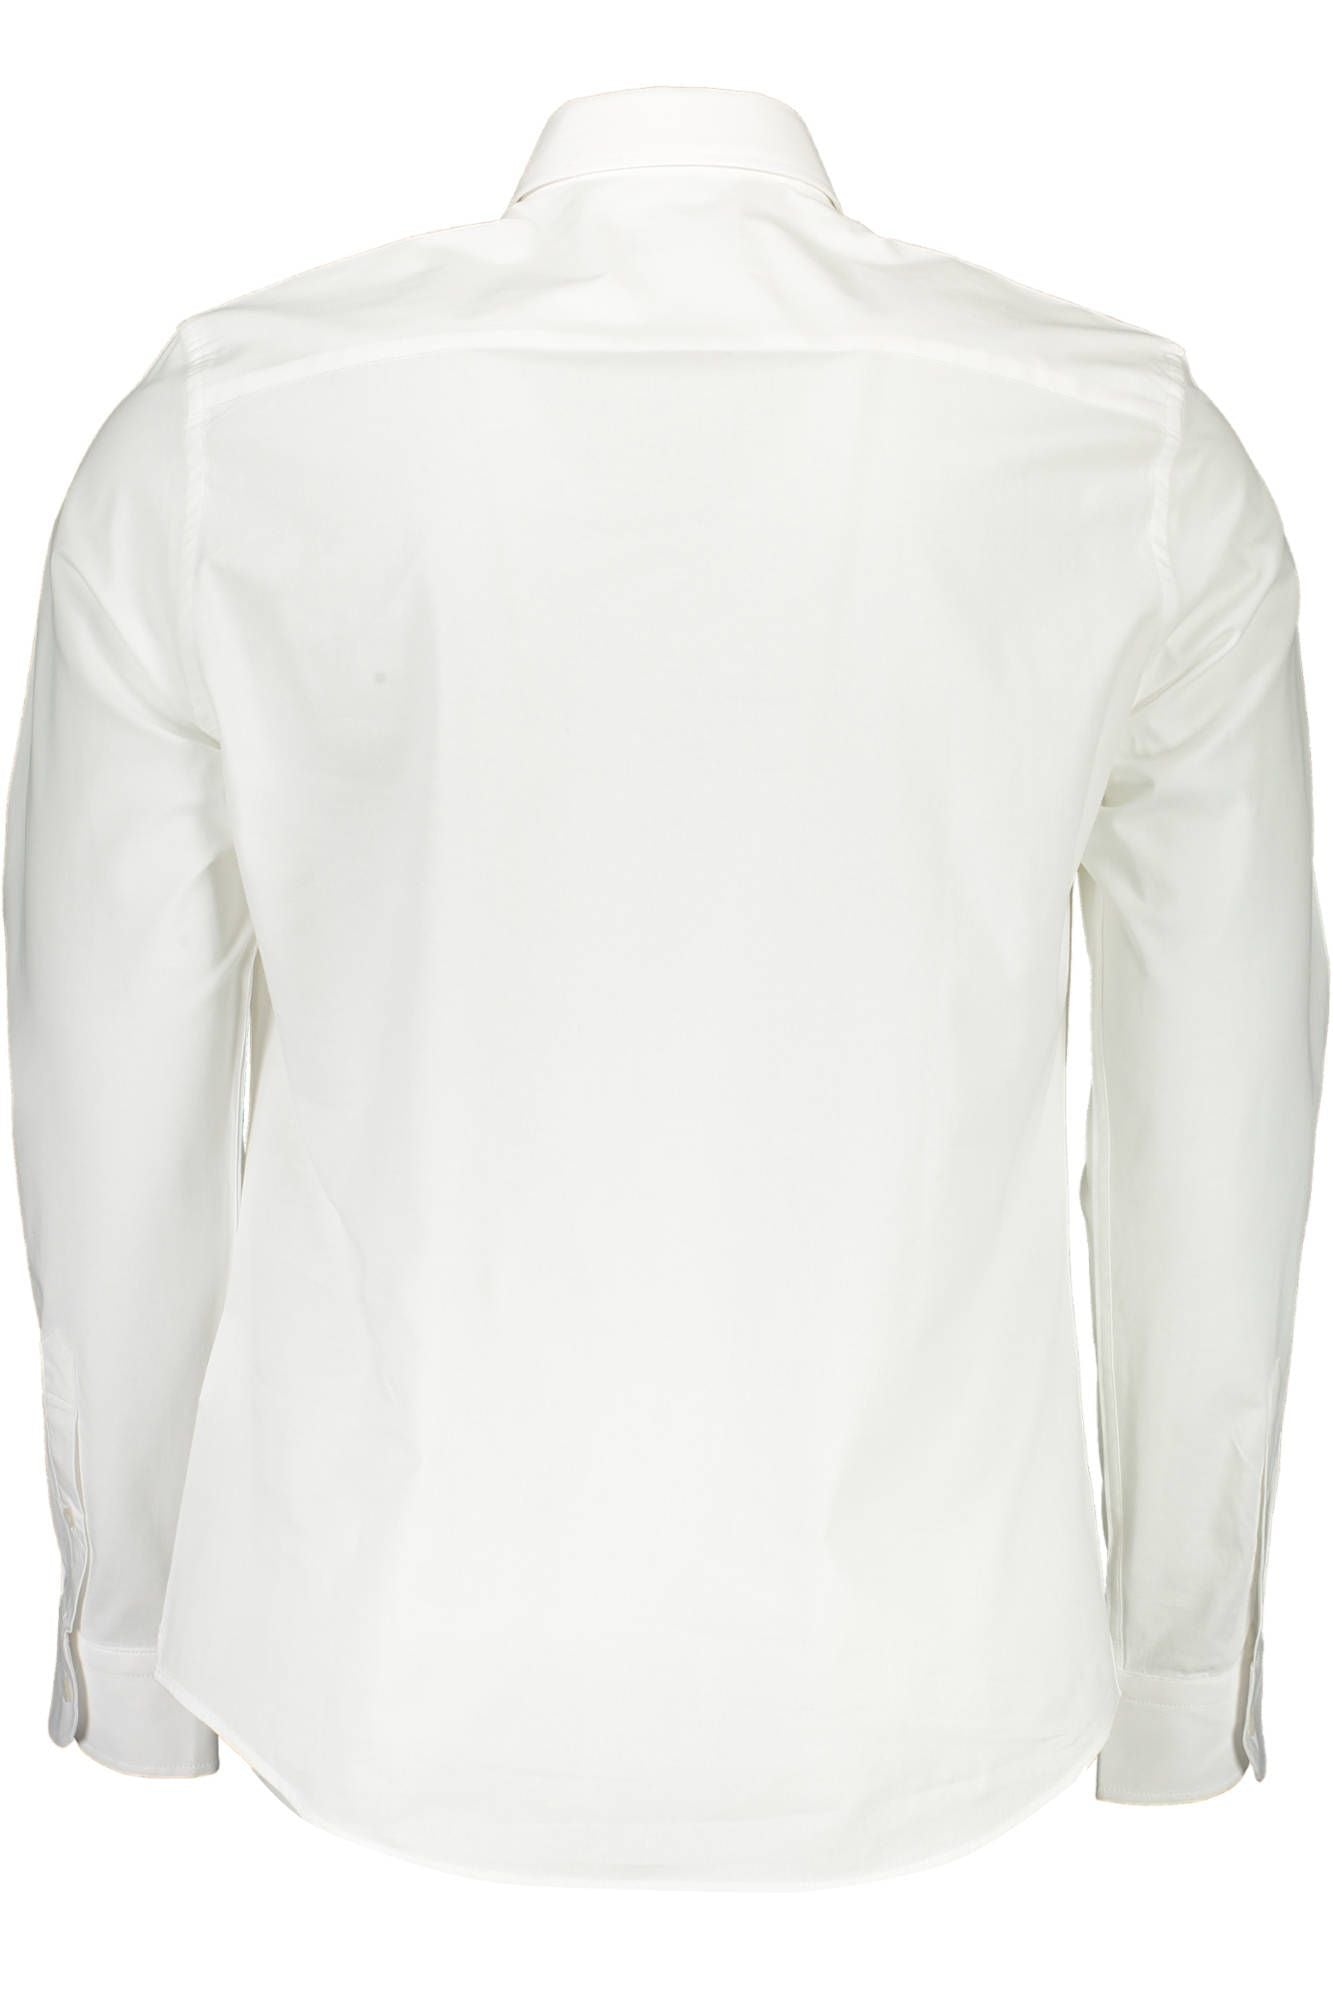 North sails white stretch cotton shirt